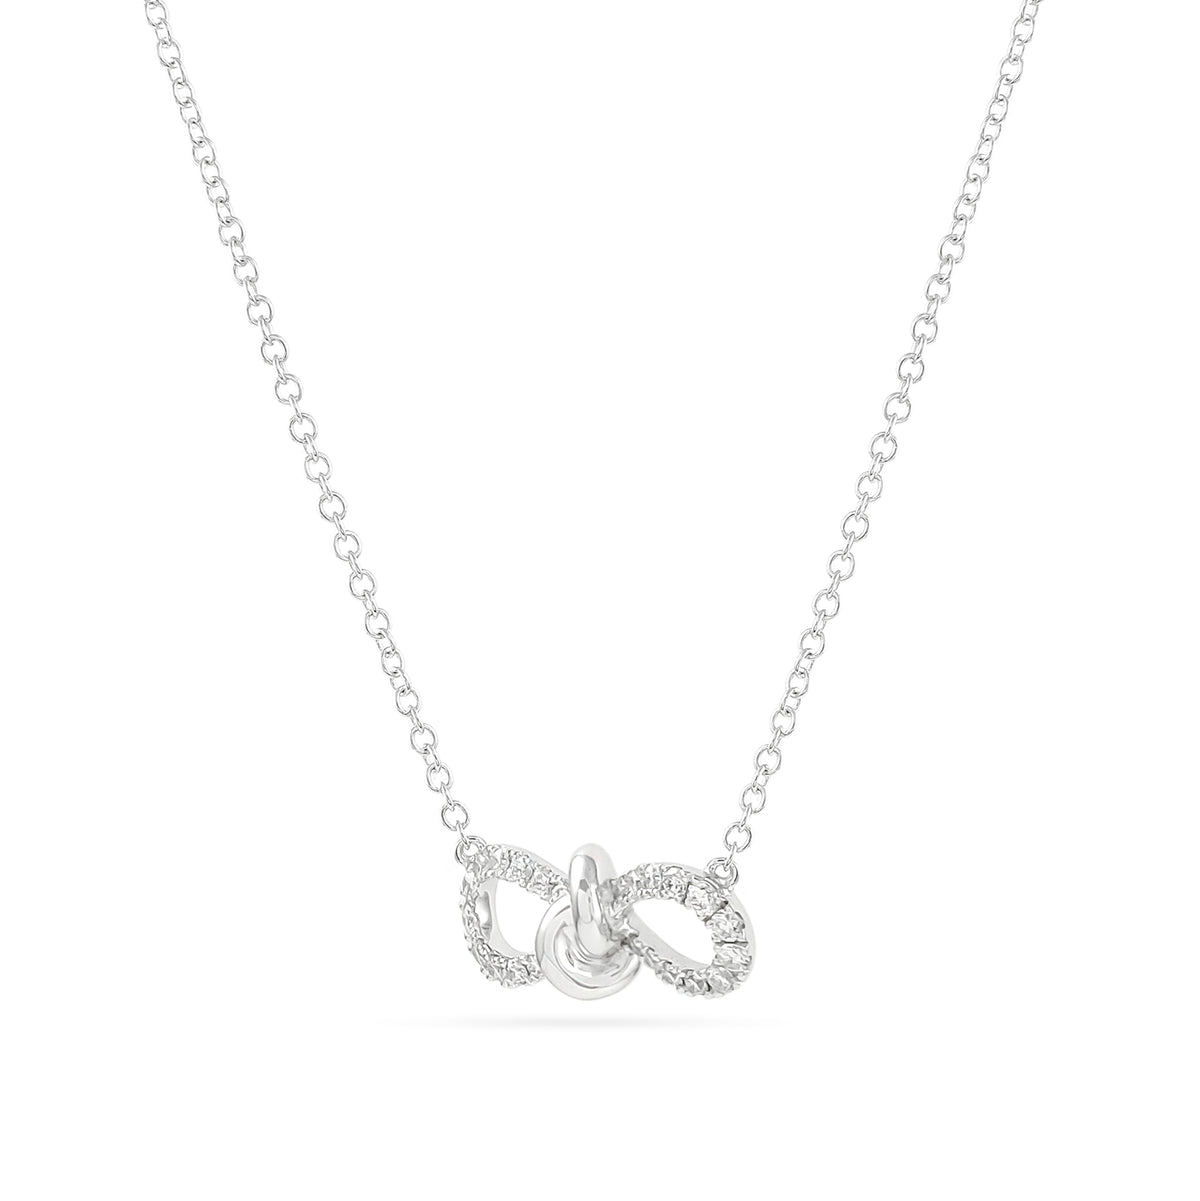 18ct White Gold Diamond Bow Necklace